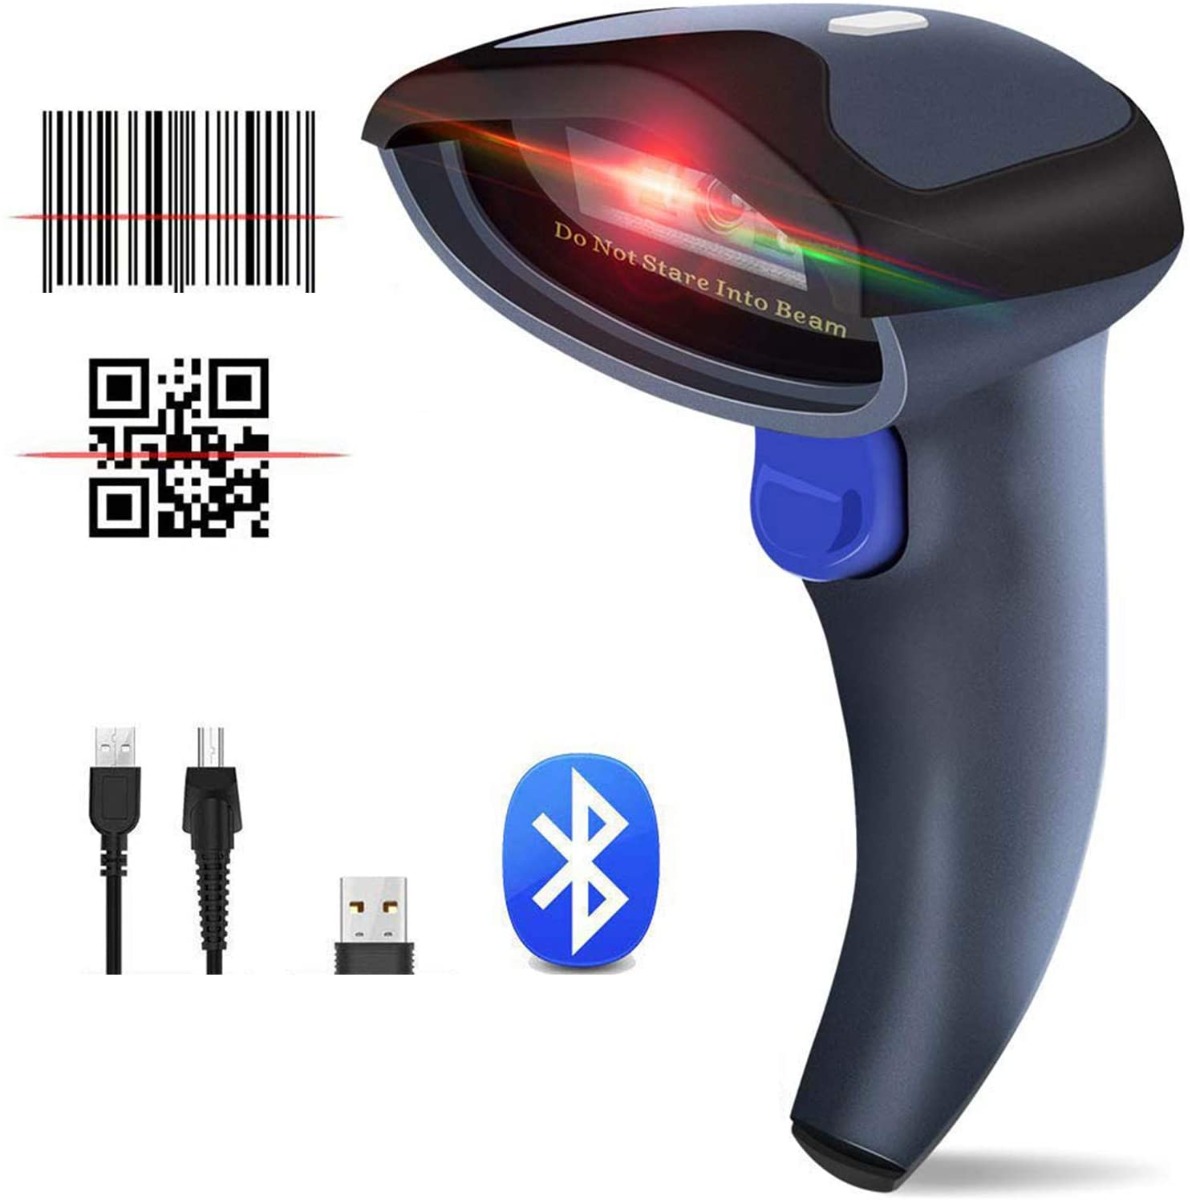 NT-W8 scan 1D, 2D, QR codes by USB, Bluetooth, wireless